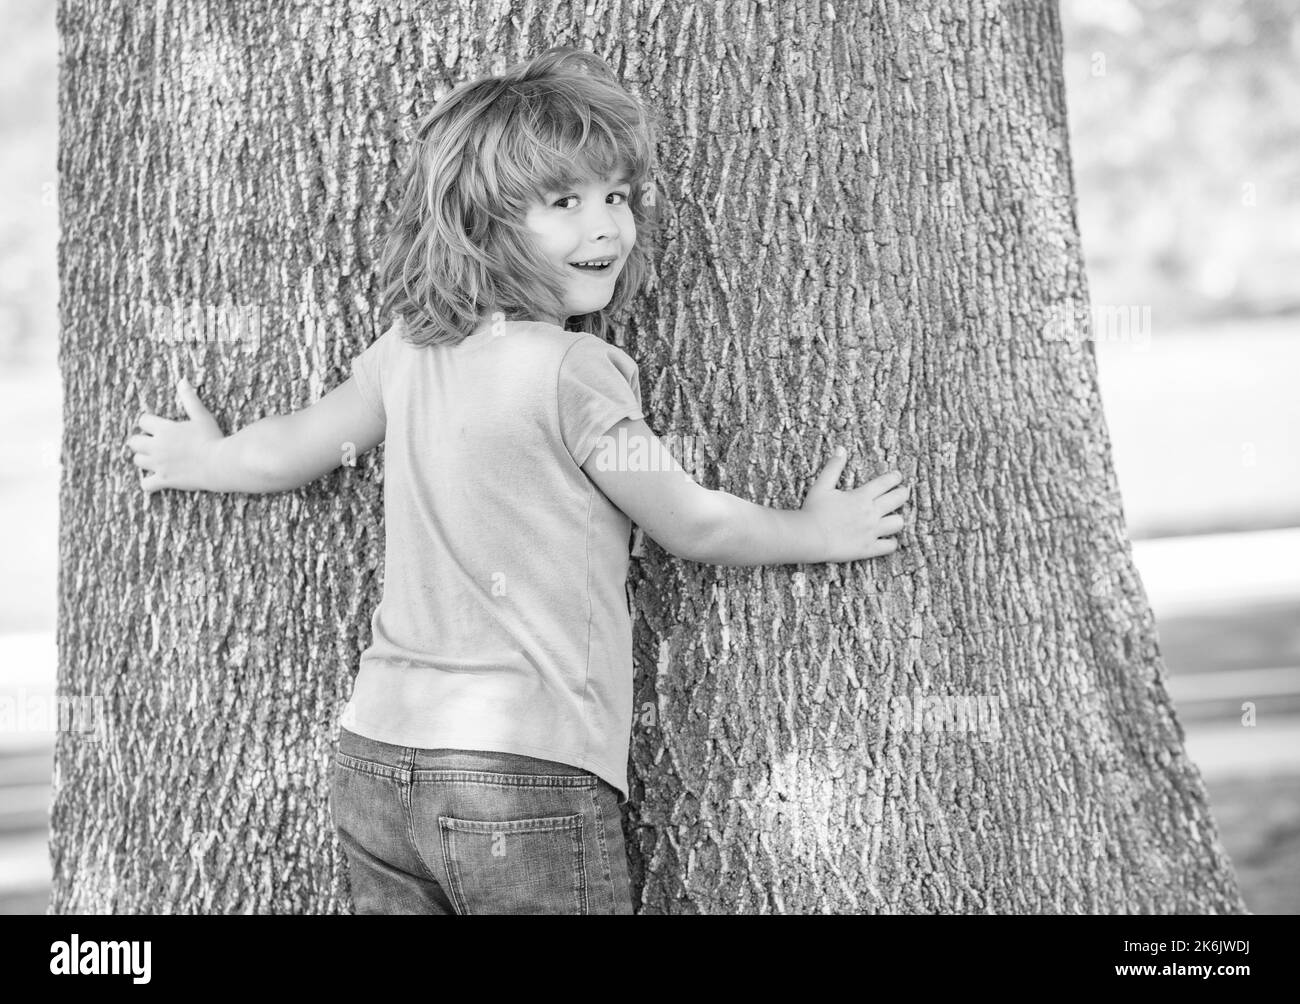 Its so wide. Boy child try to climb tree. Childhood and boyhood. Boyhood days. Tree climbing Stock Photo